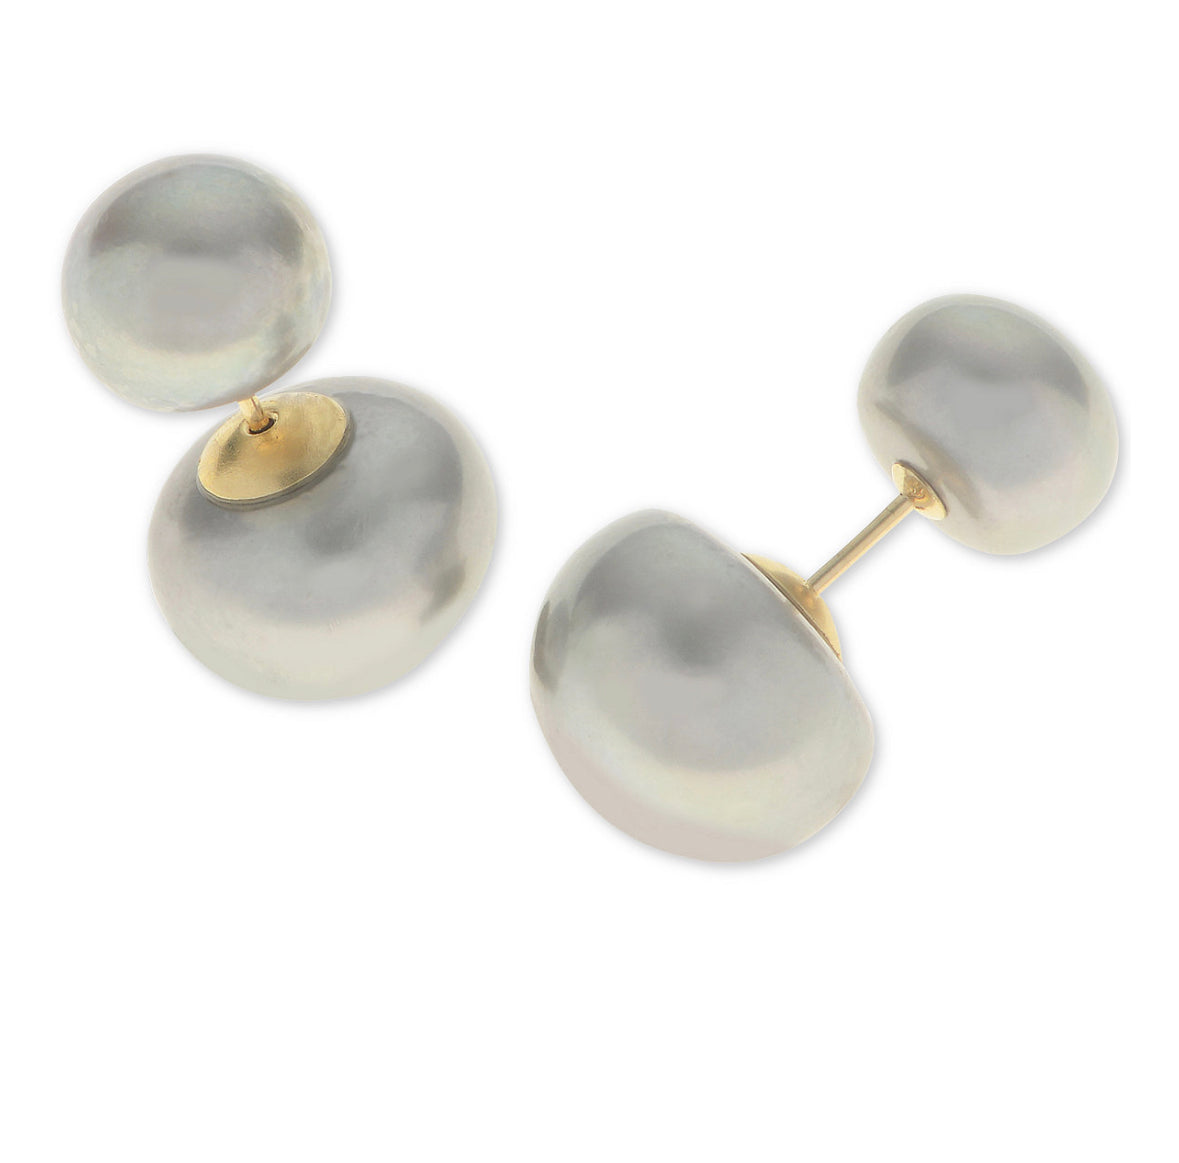 Dark Gray Cultured Freshwater Pearl Earring Set in 14k Gold